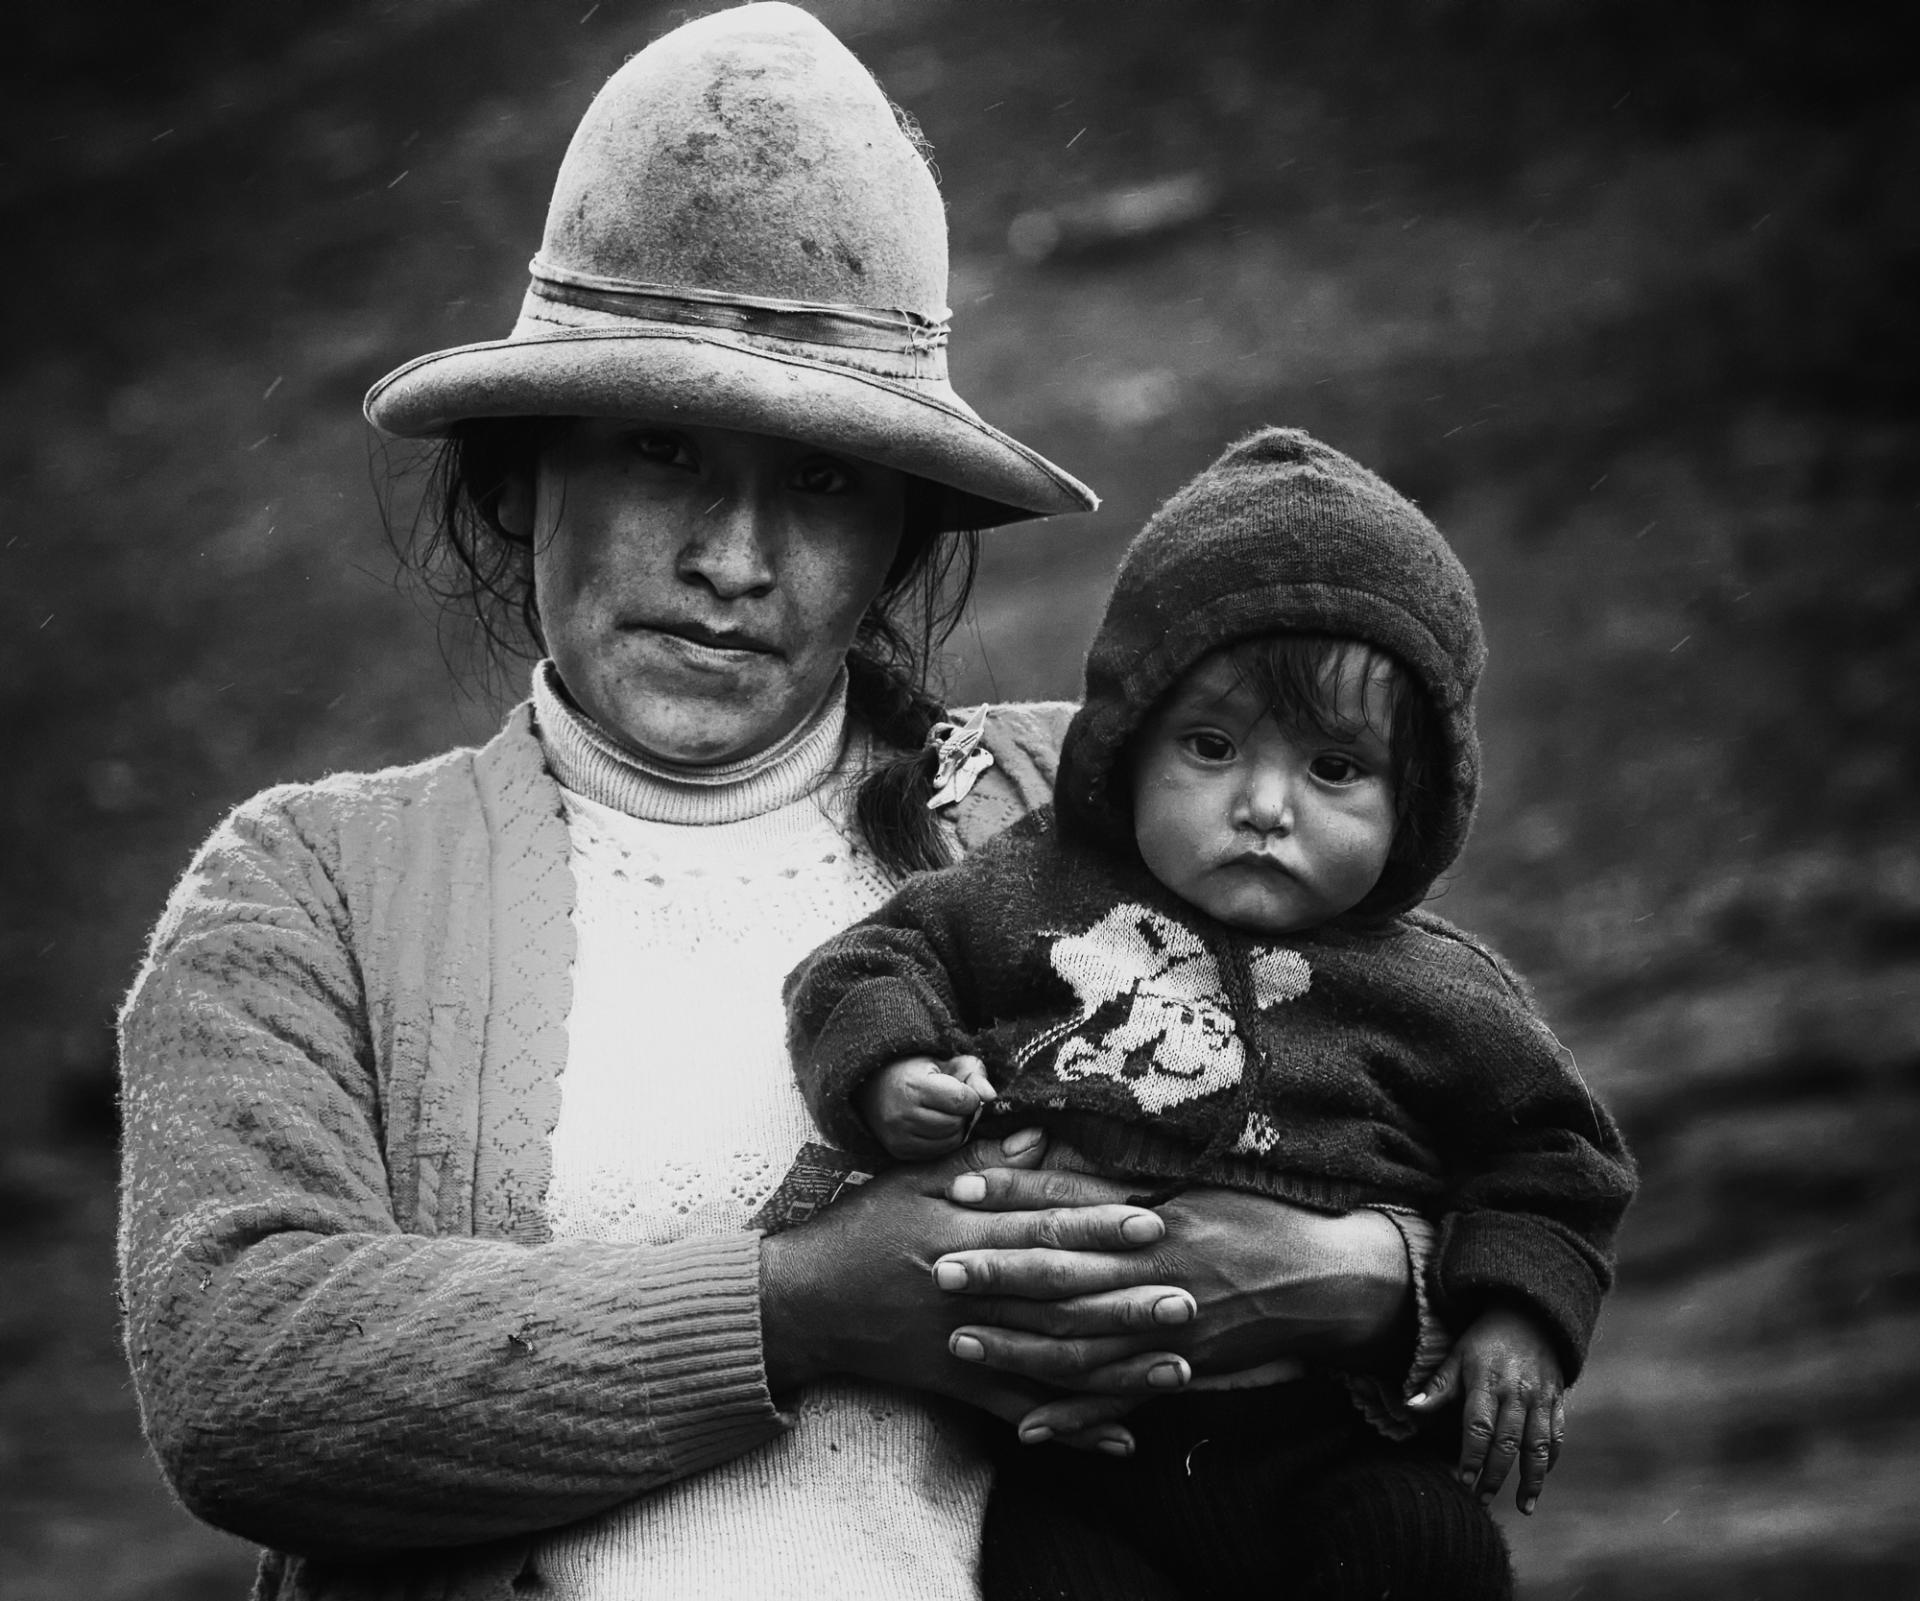 New York Photography Awards Winner - Q'ero |The Last of the Incas 